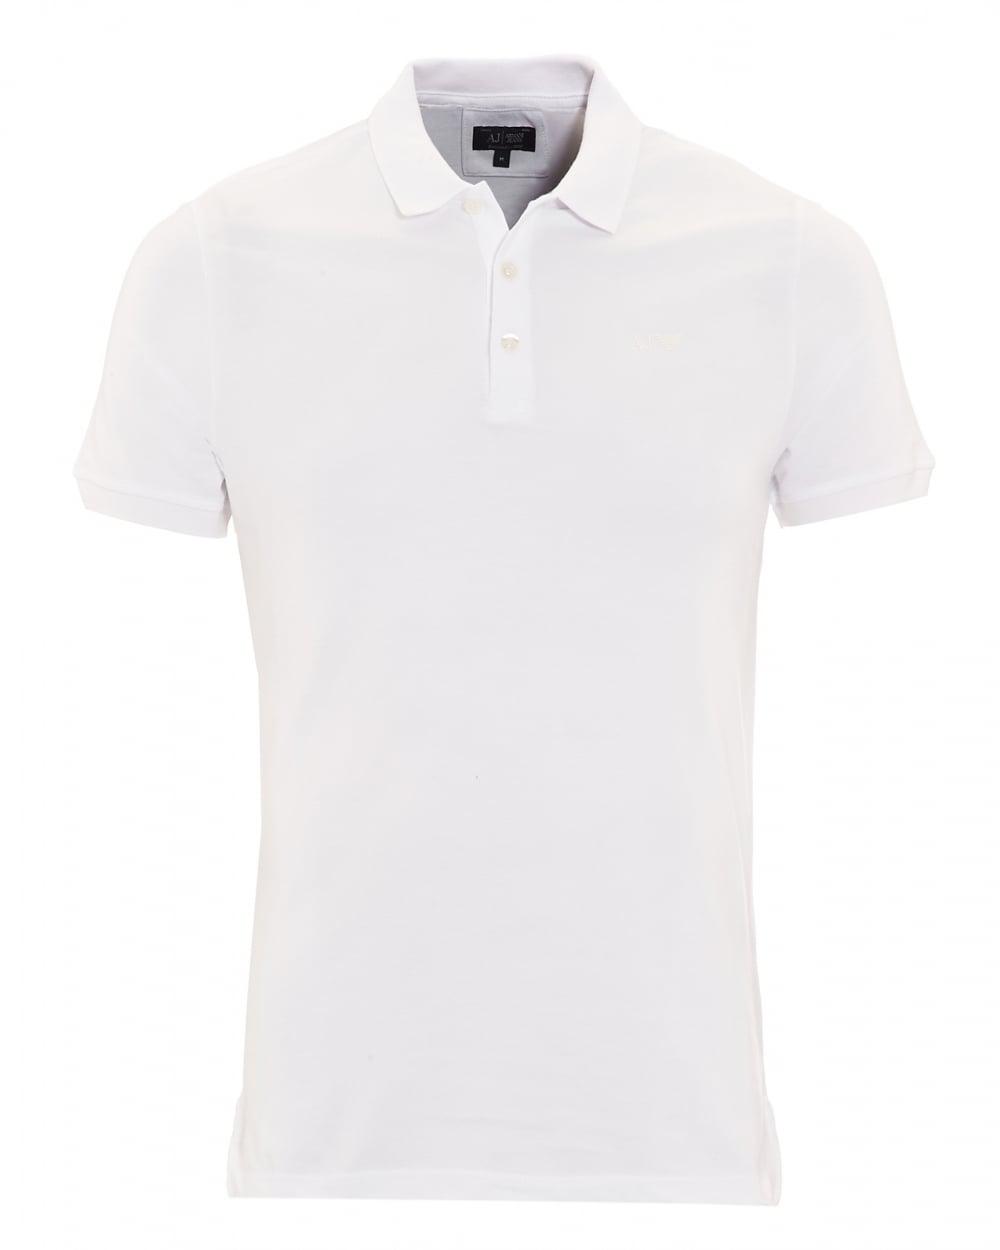 Armani Jeans Denim Polo Shirt, Plain White Short Sleeve Polo for Men - Lyst